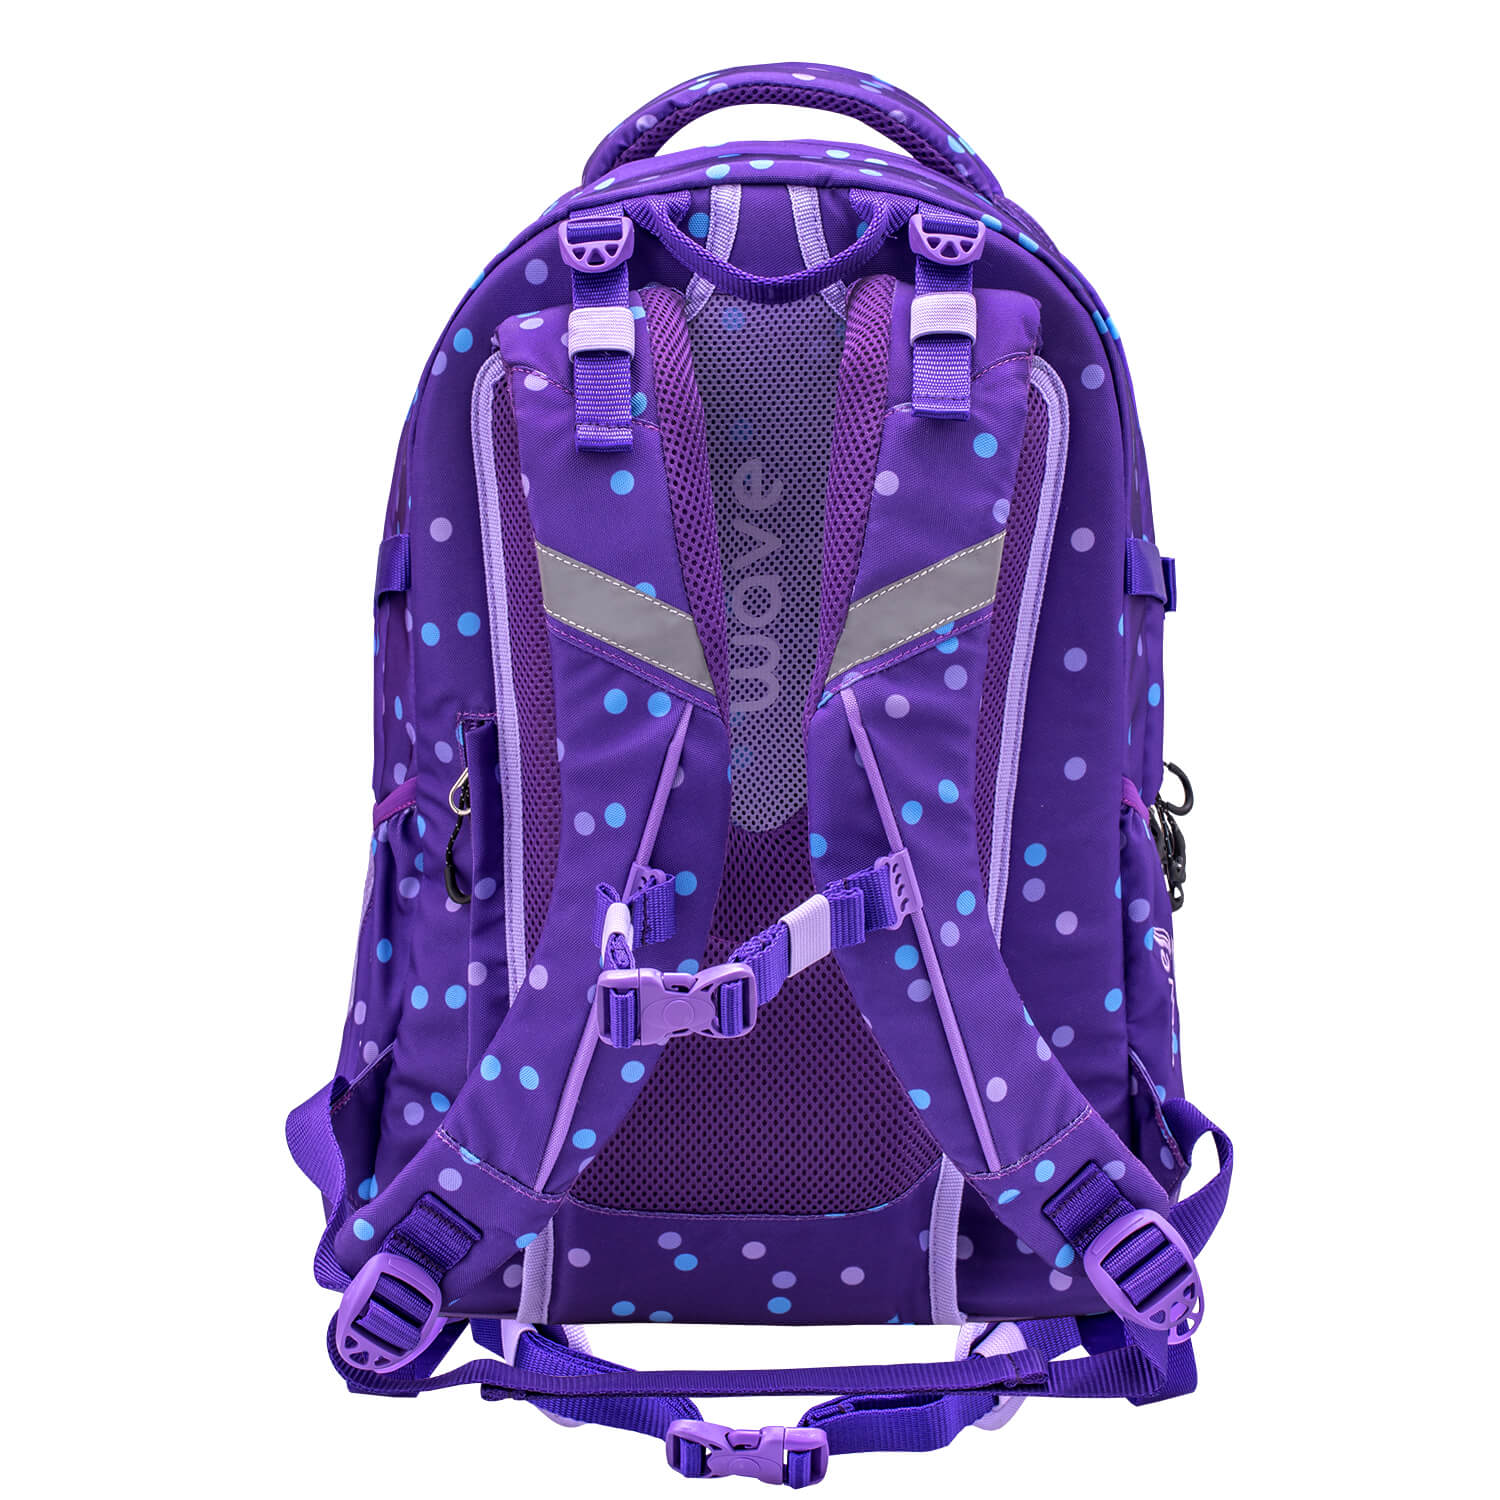 Wave Infinity Purple Dots school backpack Set 3 Pcs